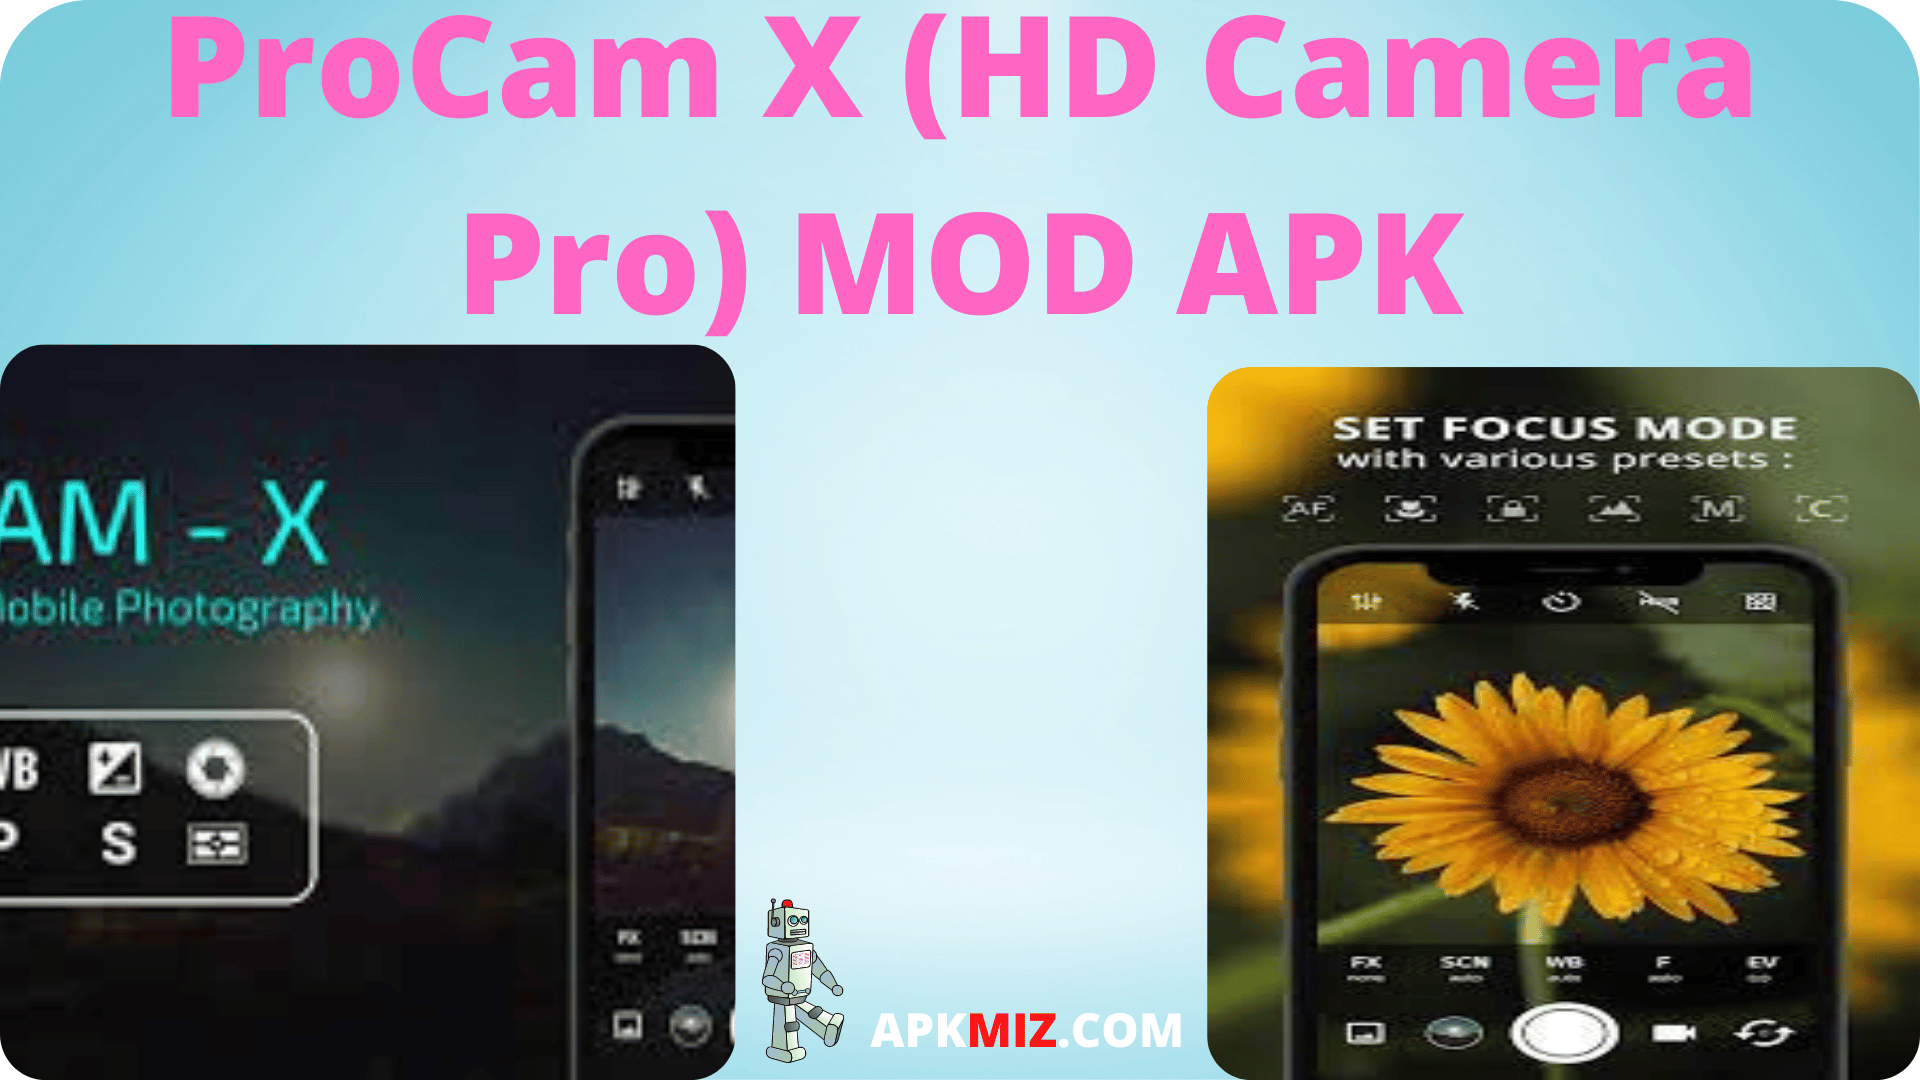 ProCam X (HD Camera Pro) MOD APK